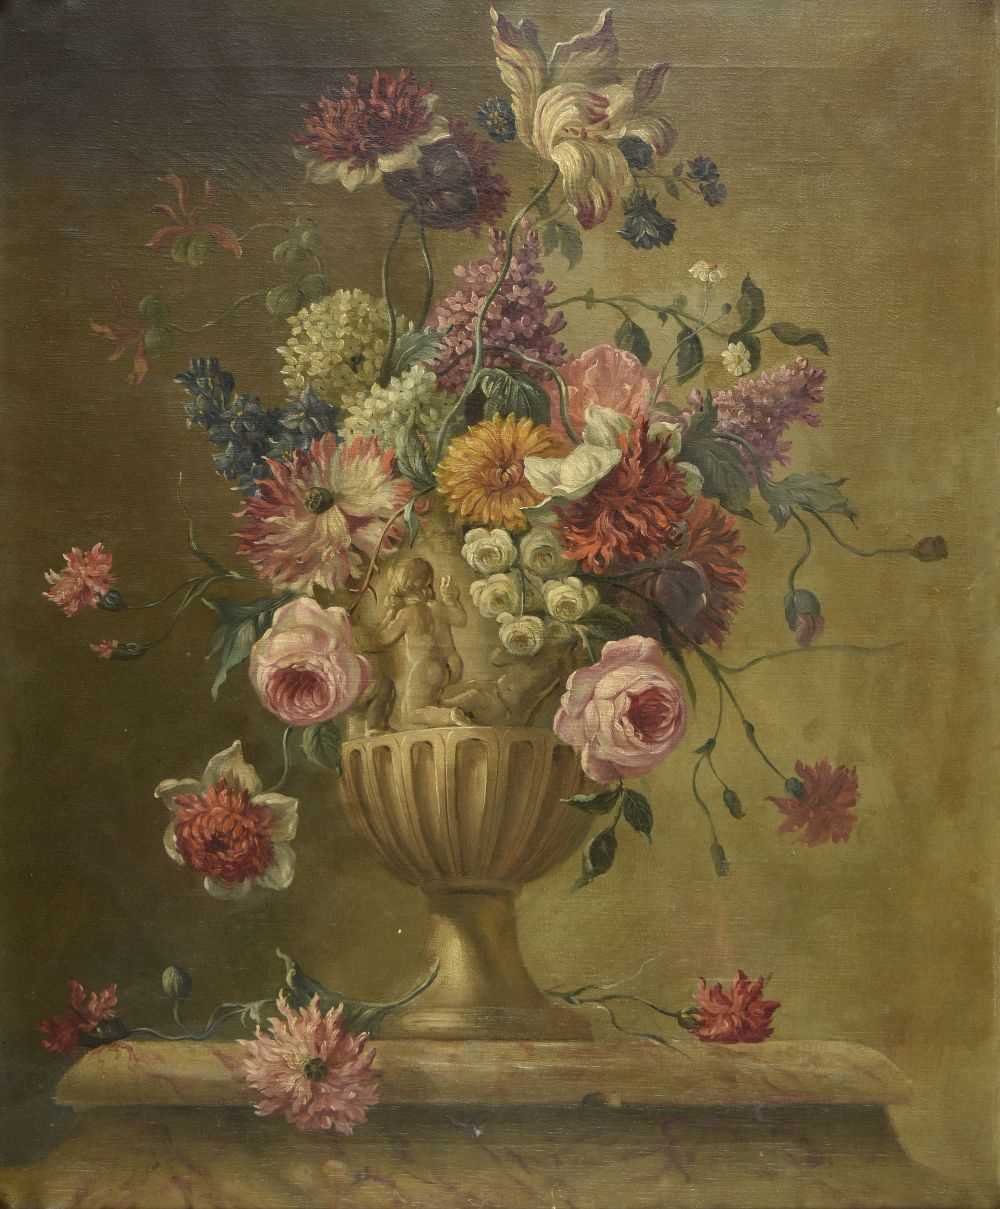 Lot 202 - Continental School. Still Life of Flowers, 2nd half 19th century